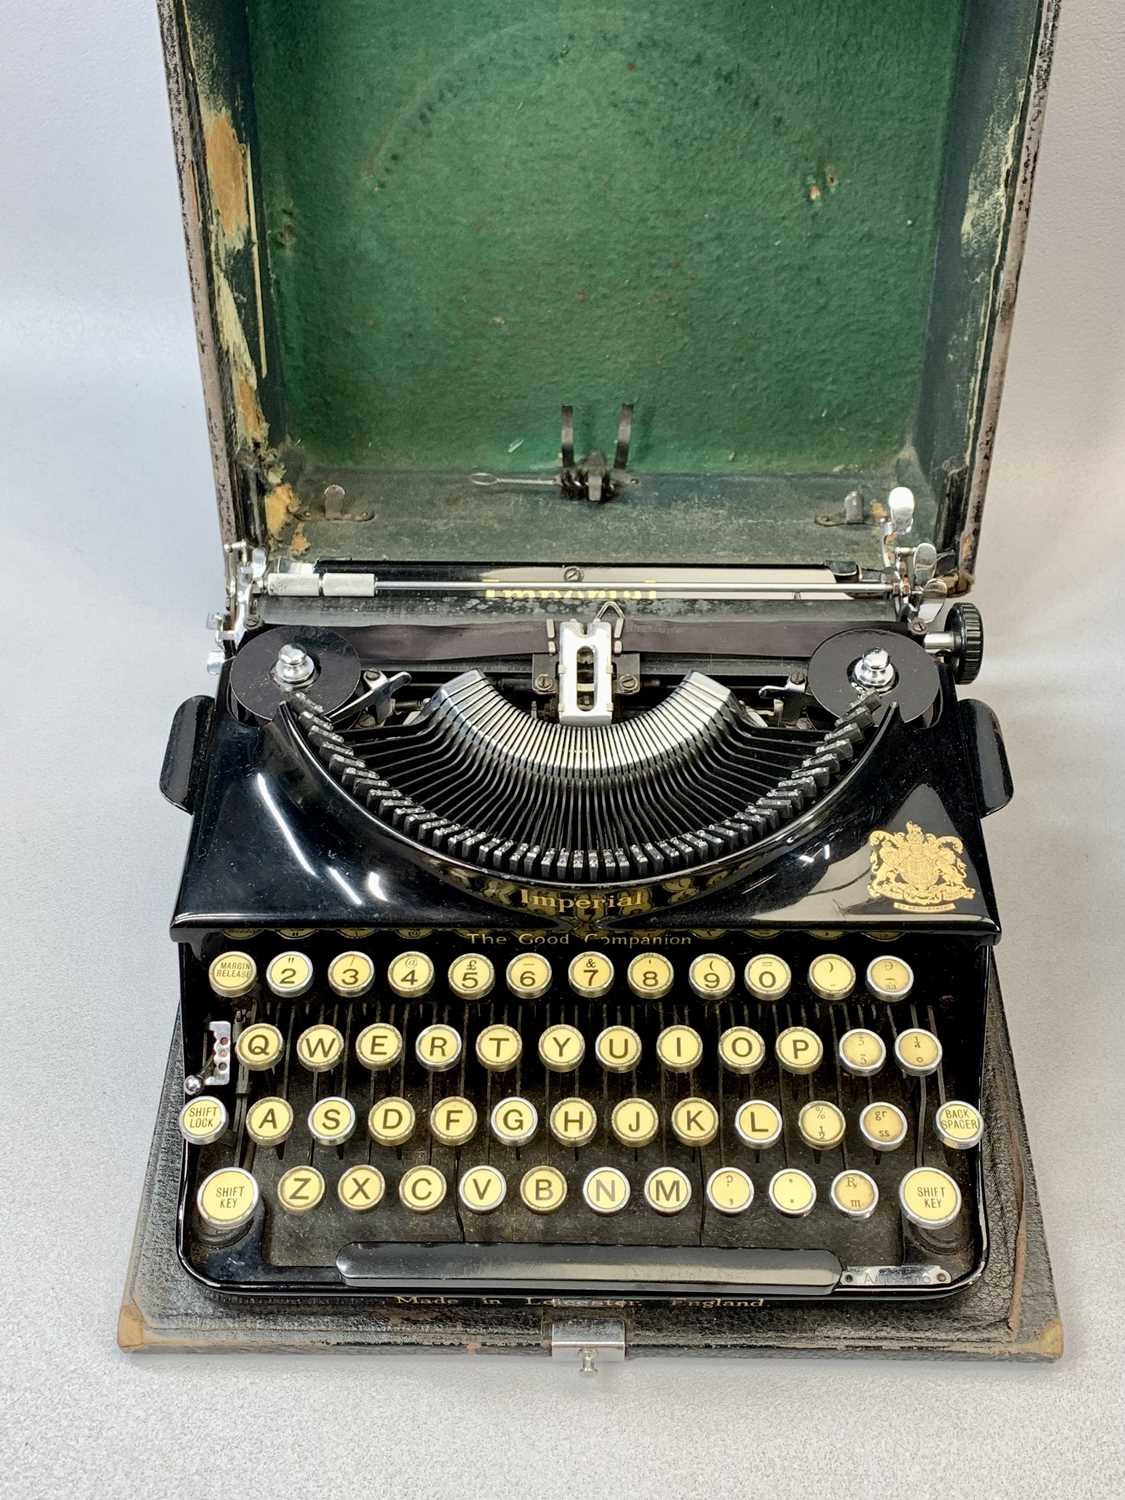 VINTAGE REMINGTON STANDARD TYPEWRITER, a vintage Imperial 'The Good Companion' portable typewriter - Image 3 of 6